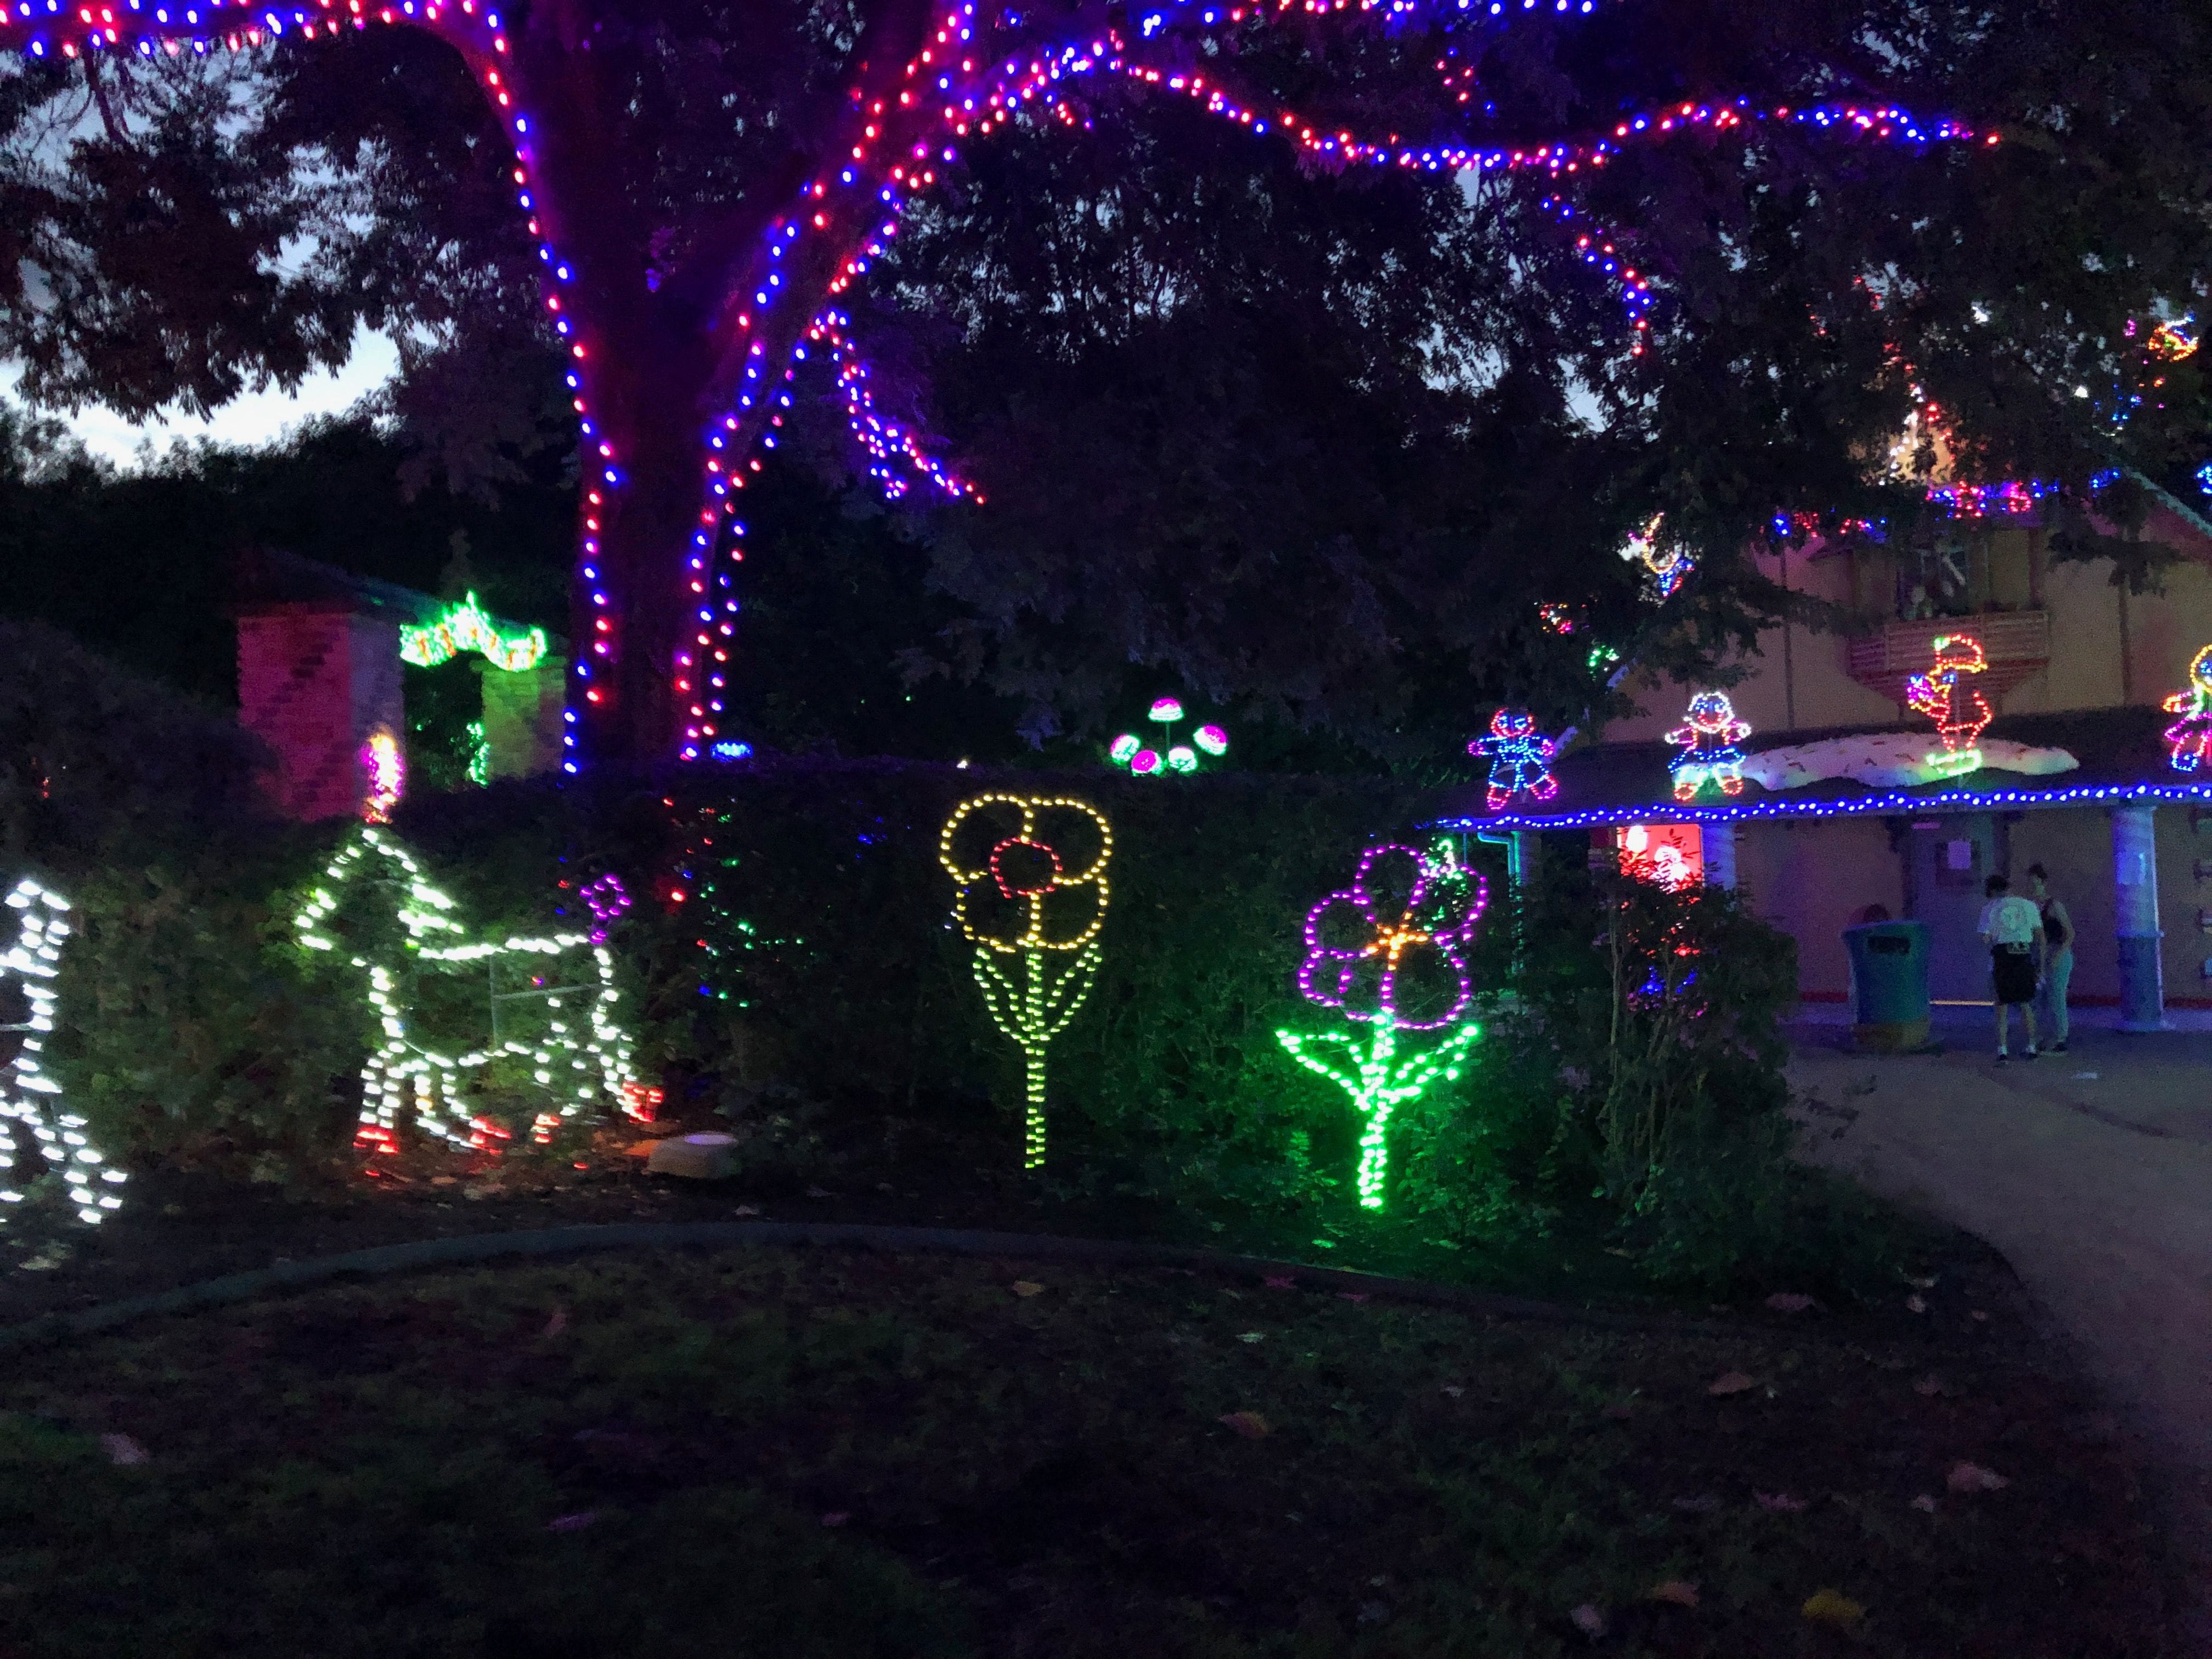 Hunter Valley Gardens Christmas Lights 2018-2019 Public Day Night Tour Image -5c149f3c3cd29